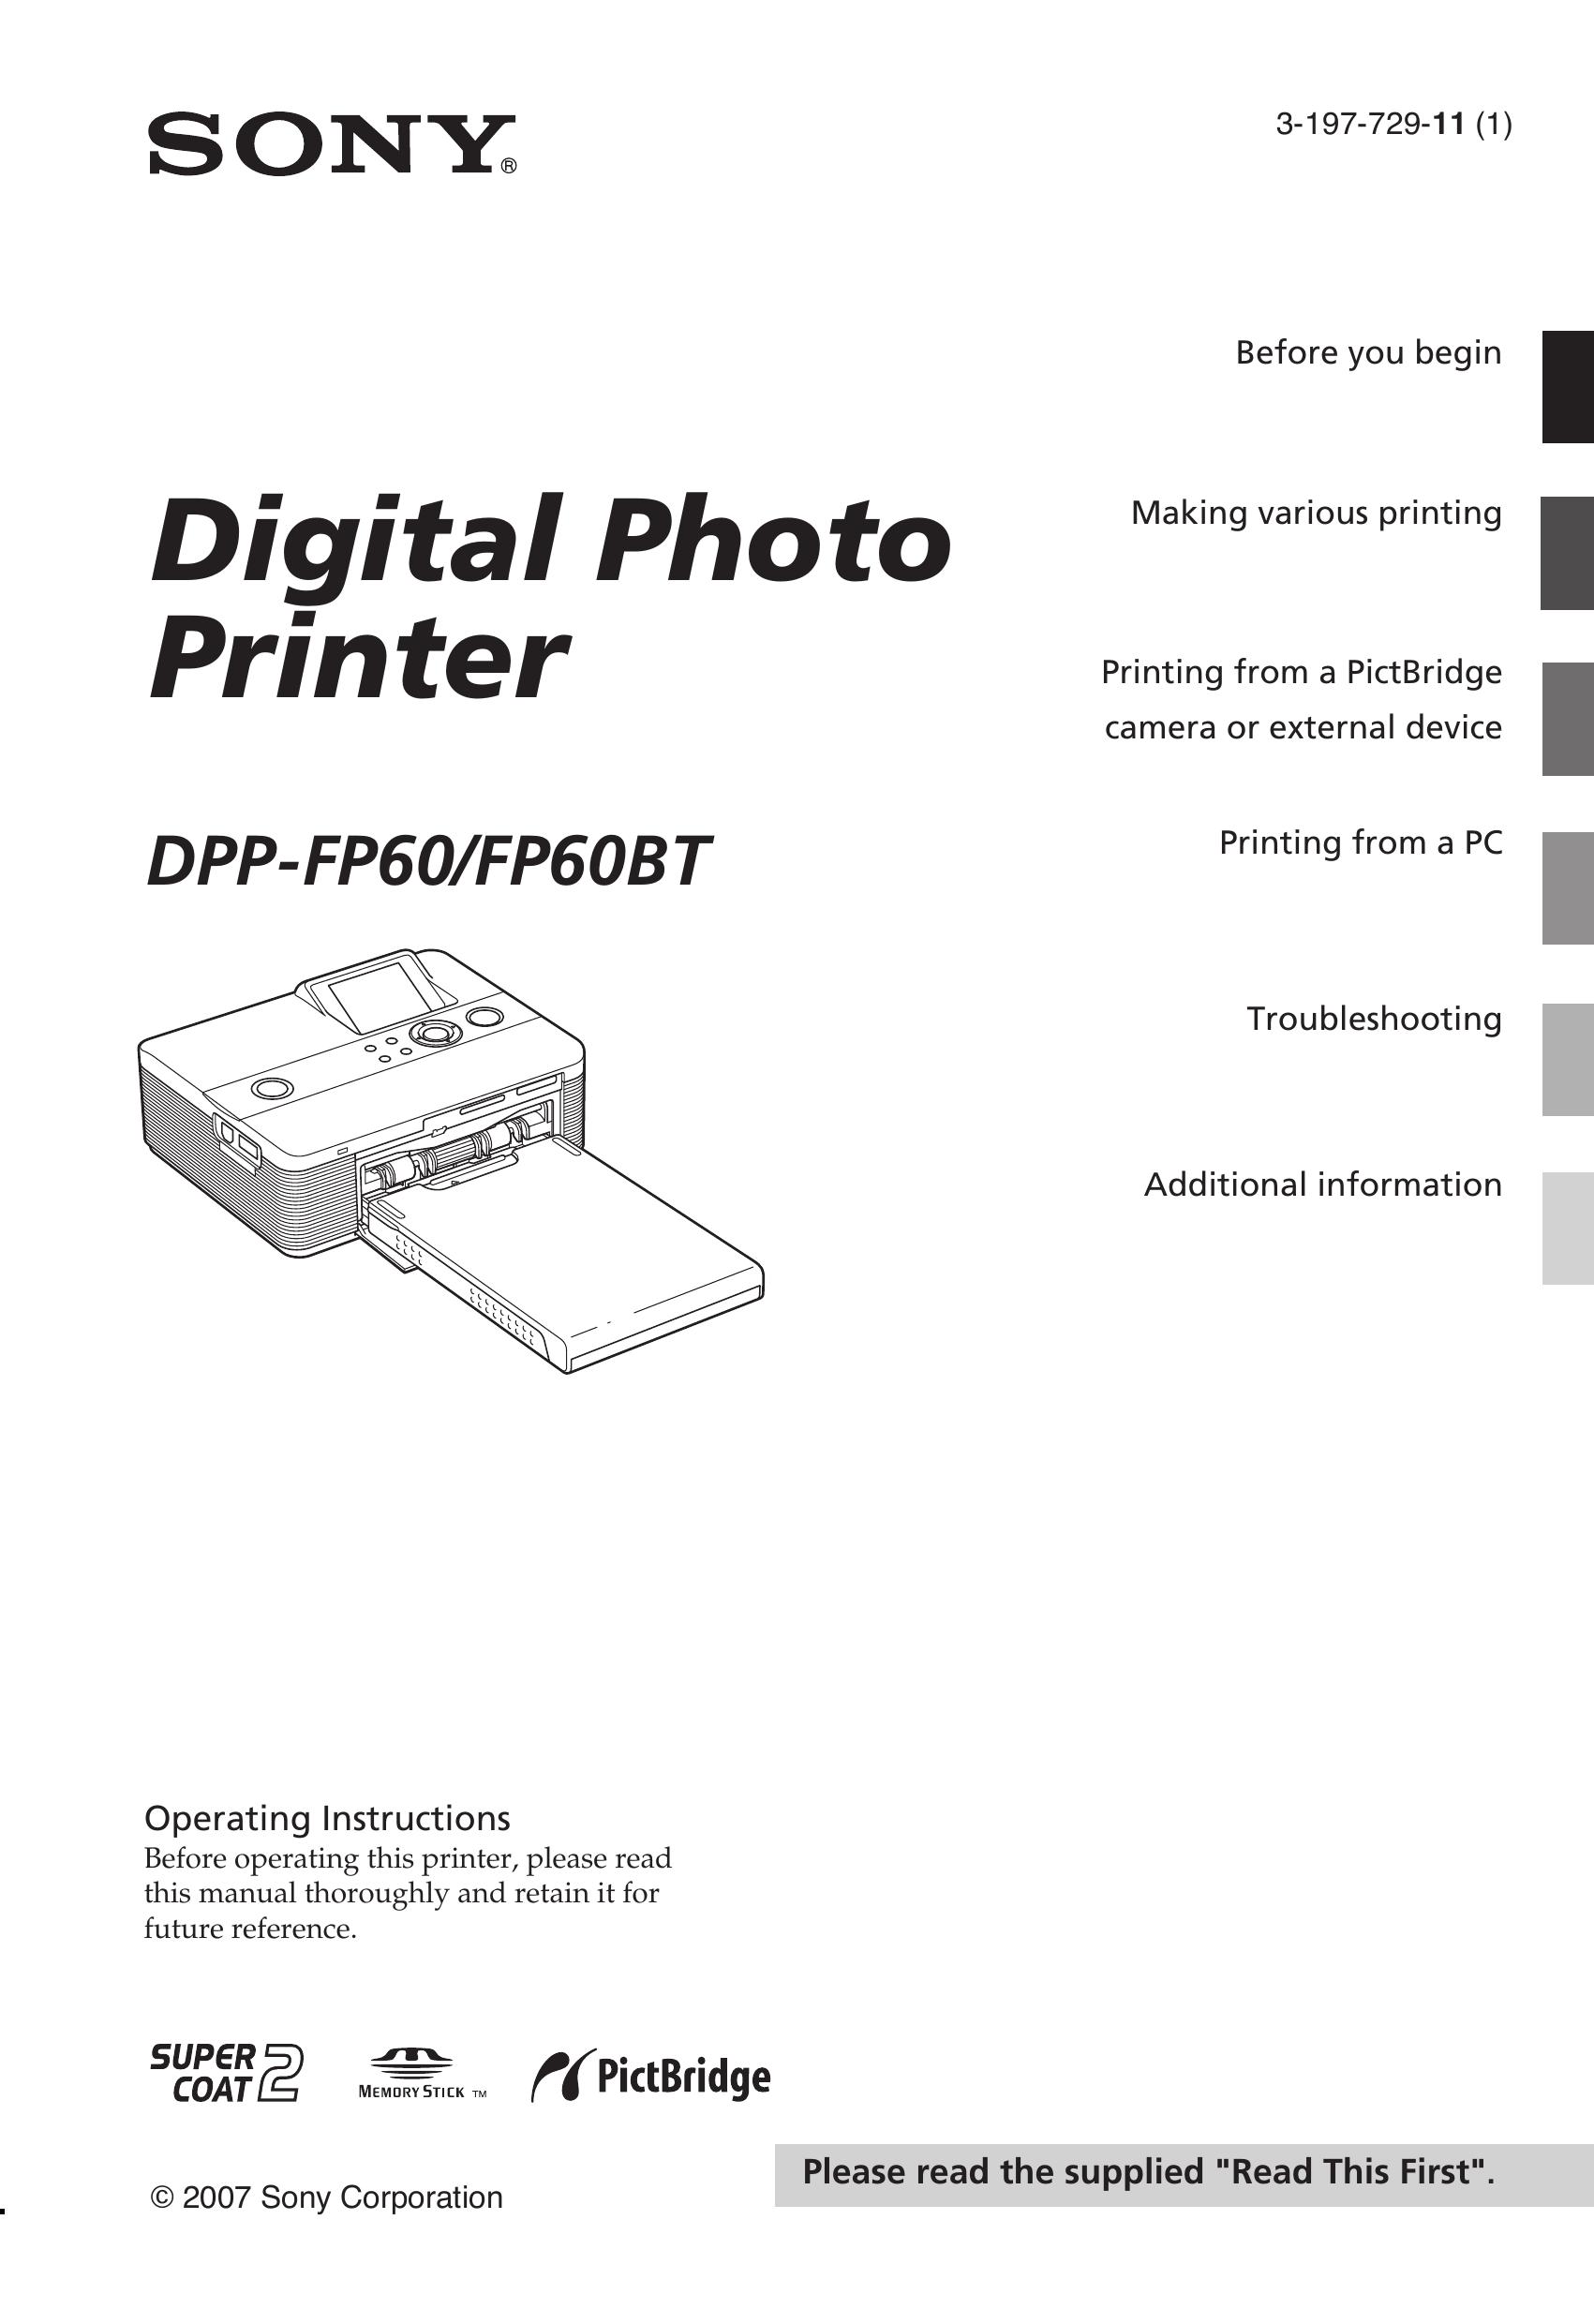 Sony DPP-FP60 Photo Printer User Manual